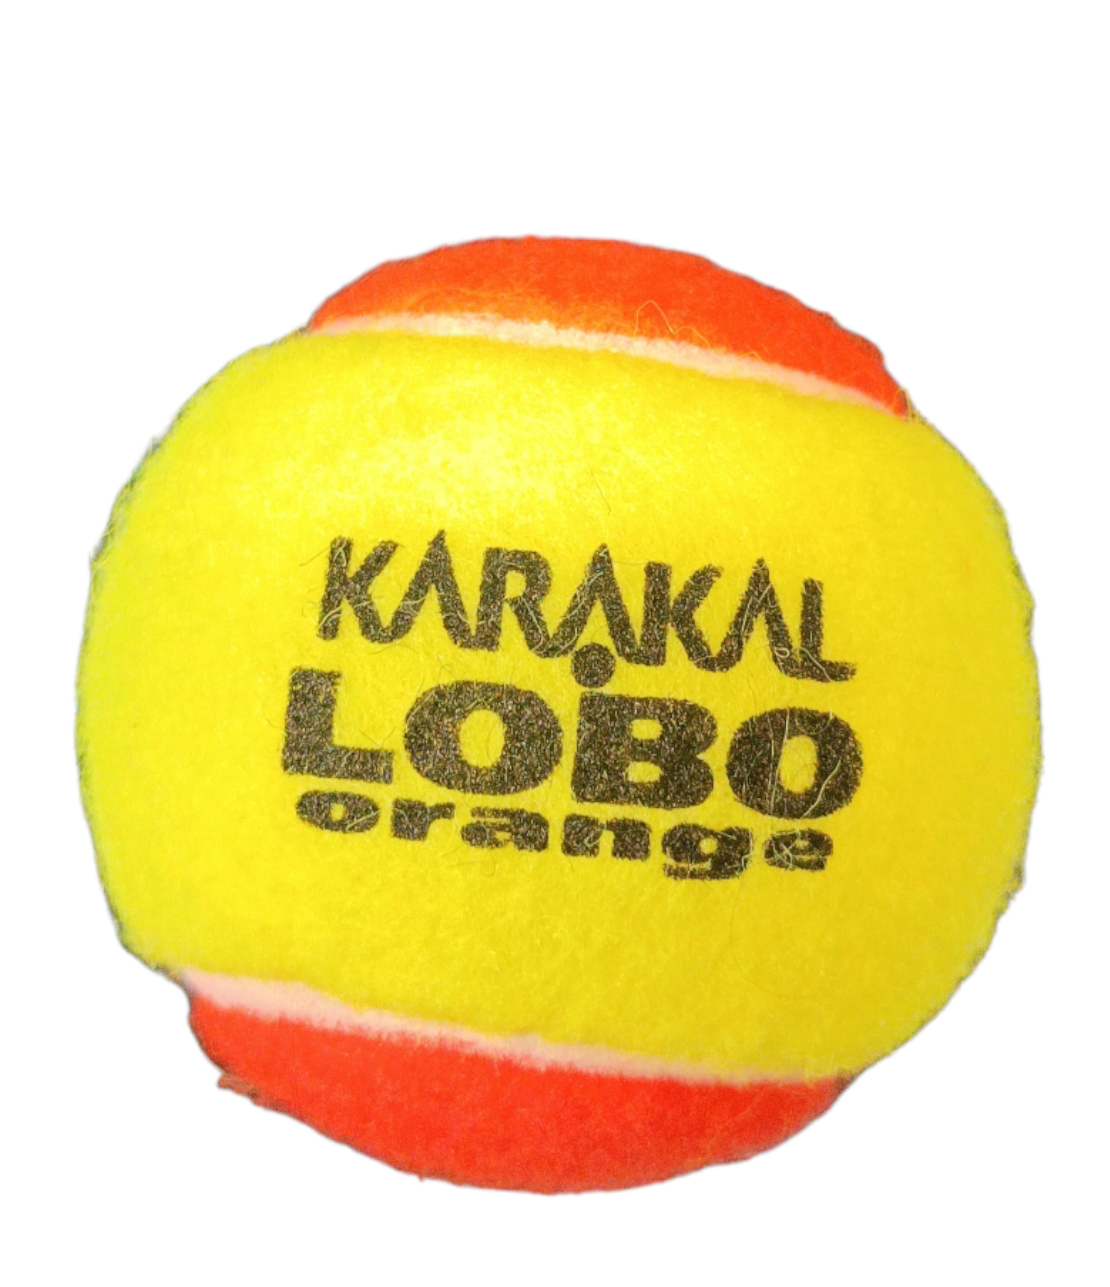 KARAKAL LOBO TENNIS BALL